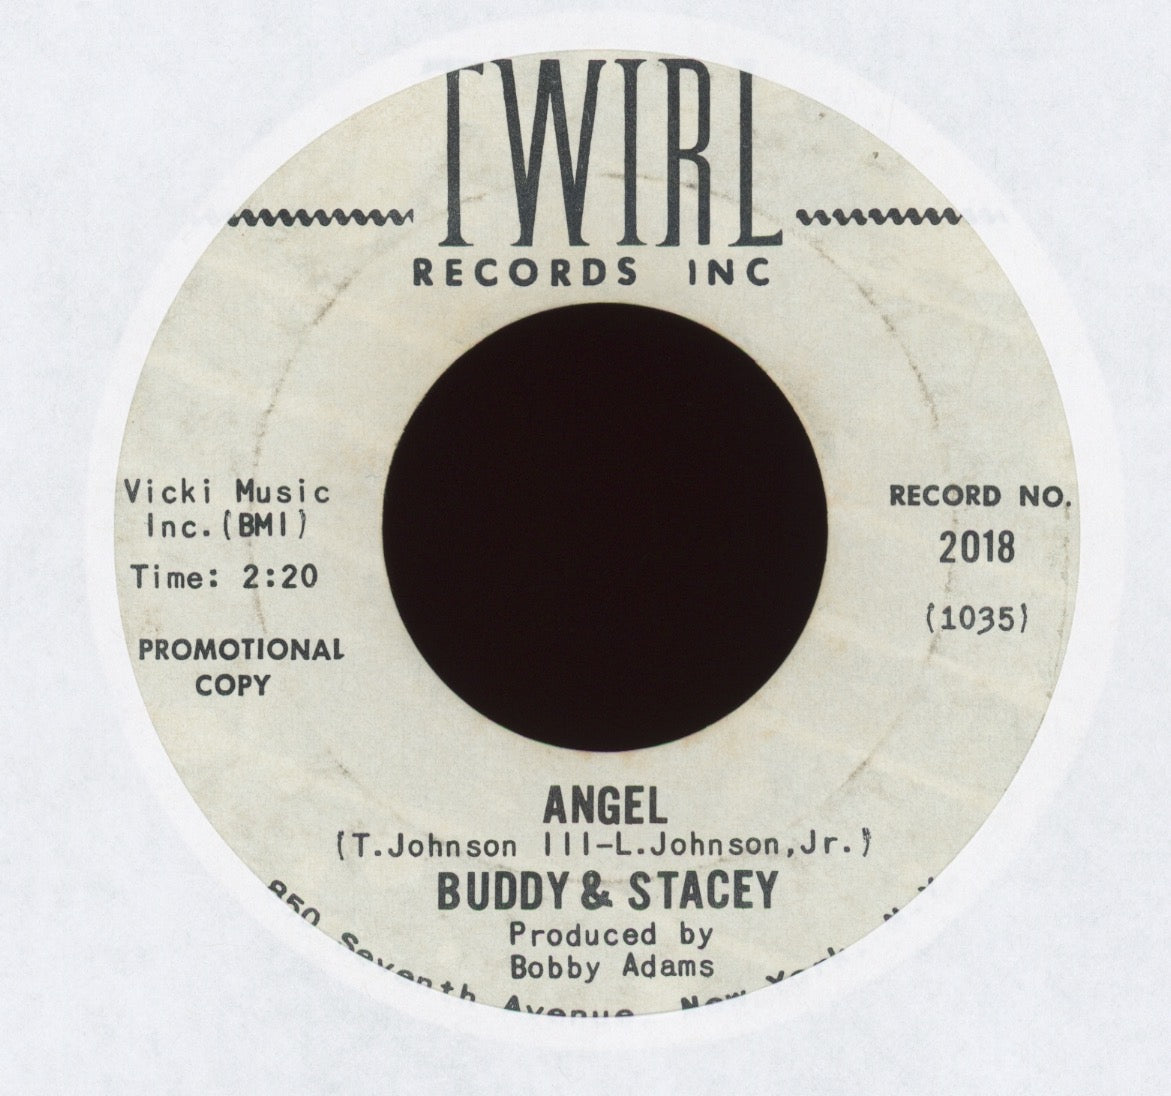 Buddy & Stacey - Angel on Twirld Promo Northern Soul 45